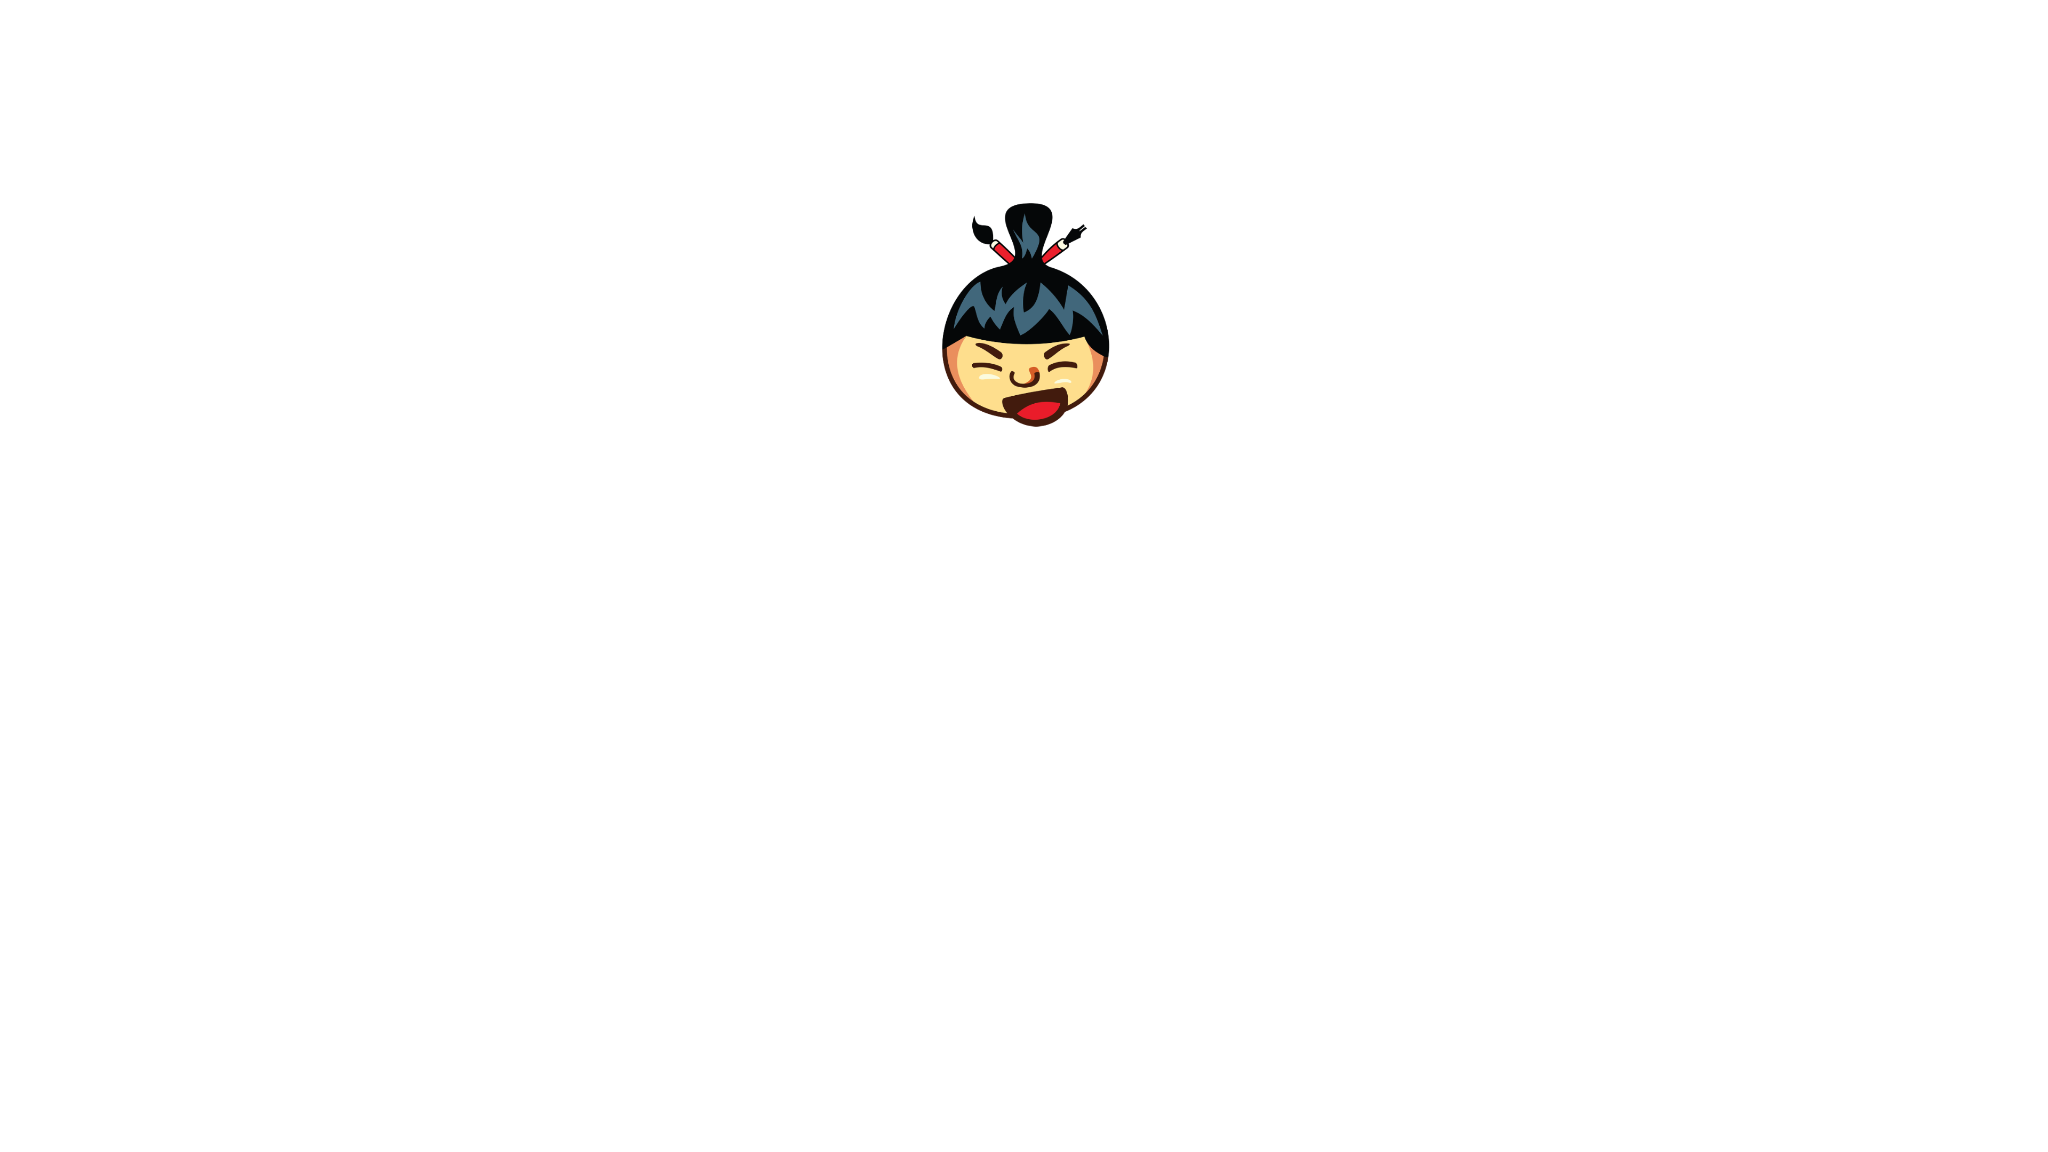 Sumo Video Intro - dicipta oleh Lauri Koutaniemi dengan paint